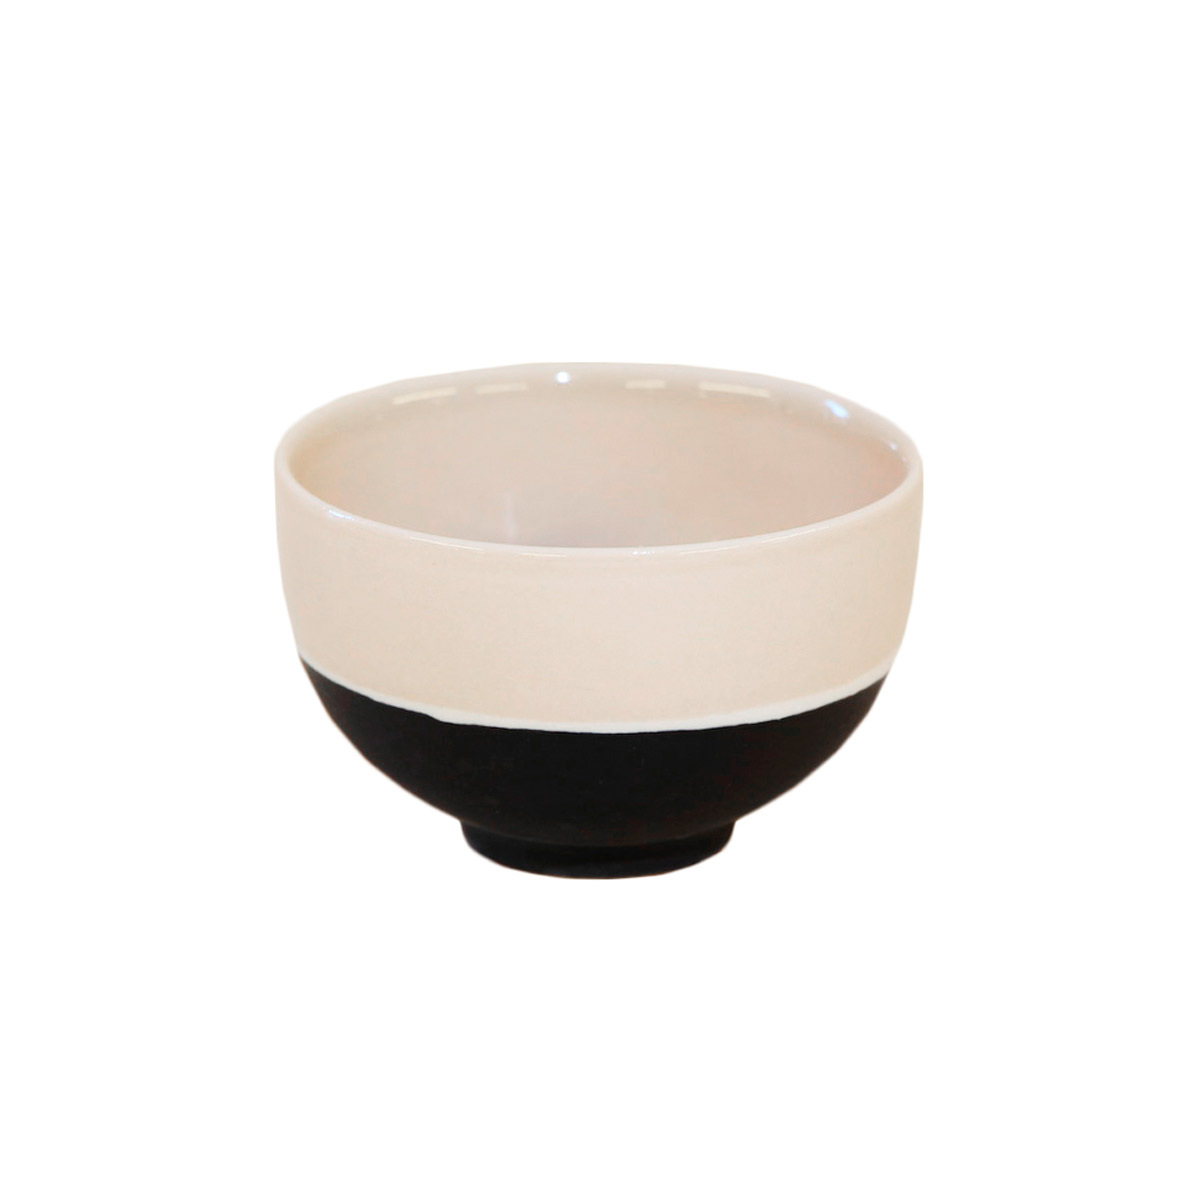 Small Bowl Sicilia, Nude - ø8,5 cm - Ceramic - image 1